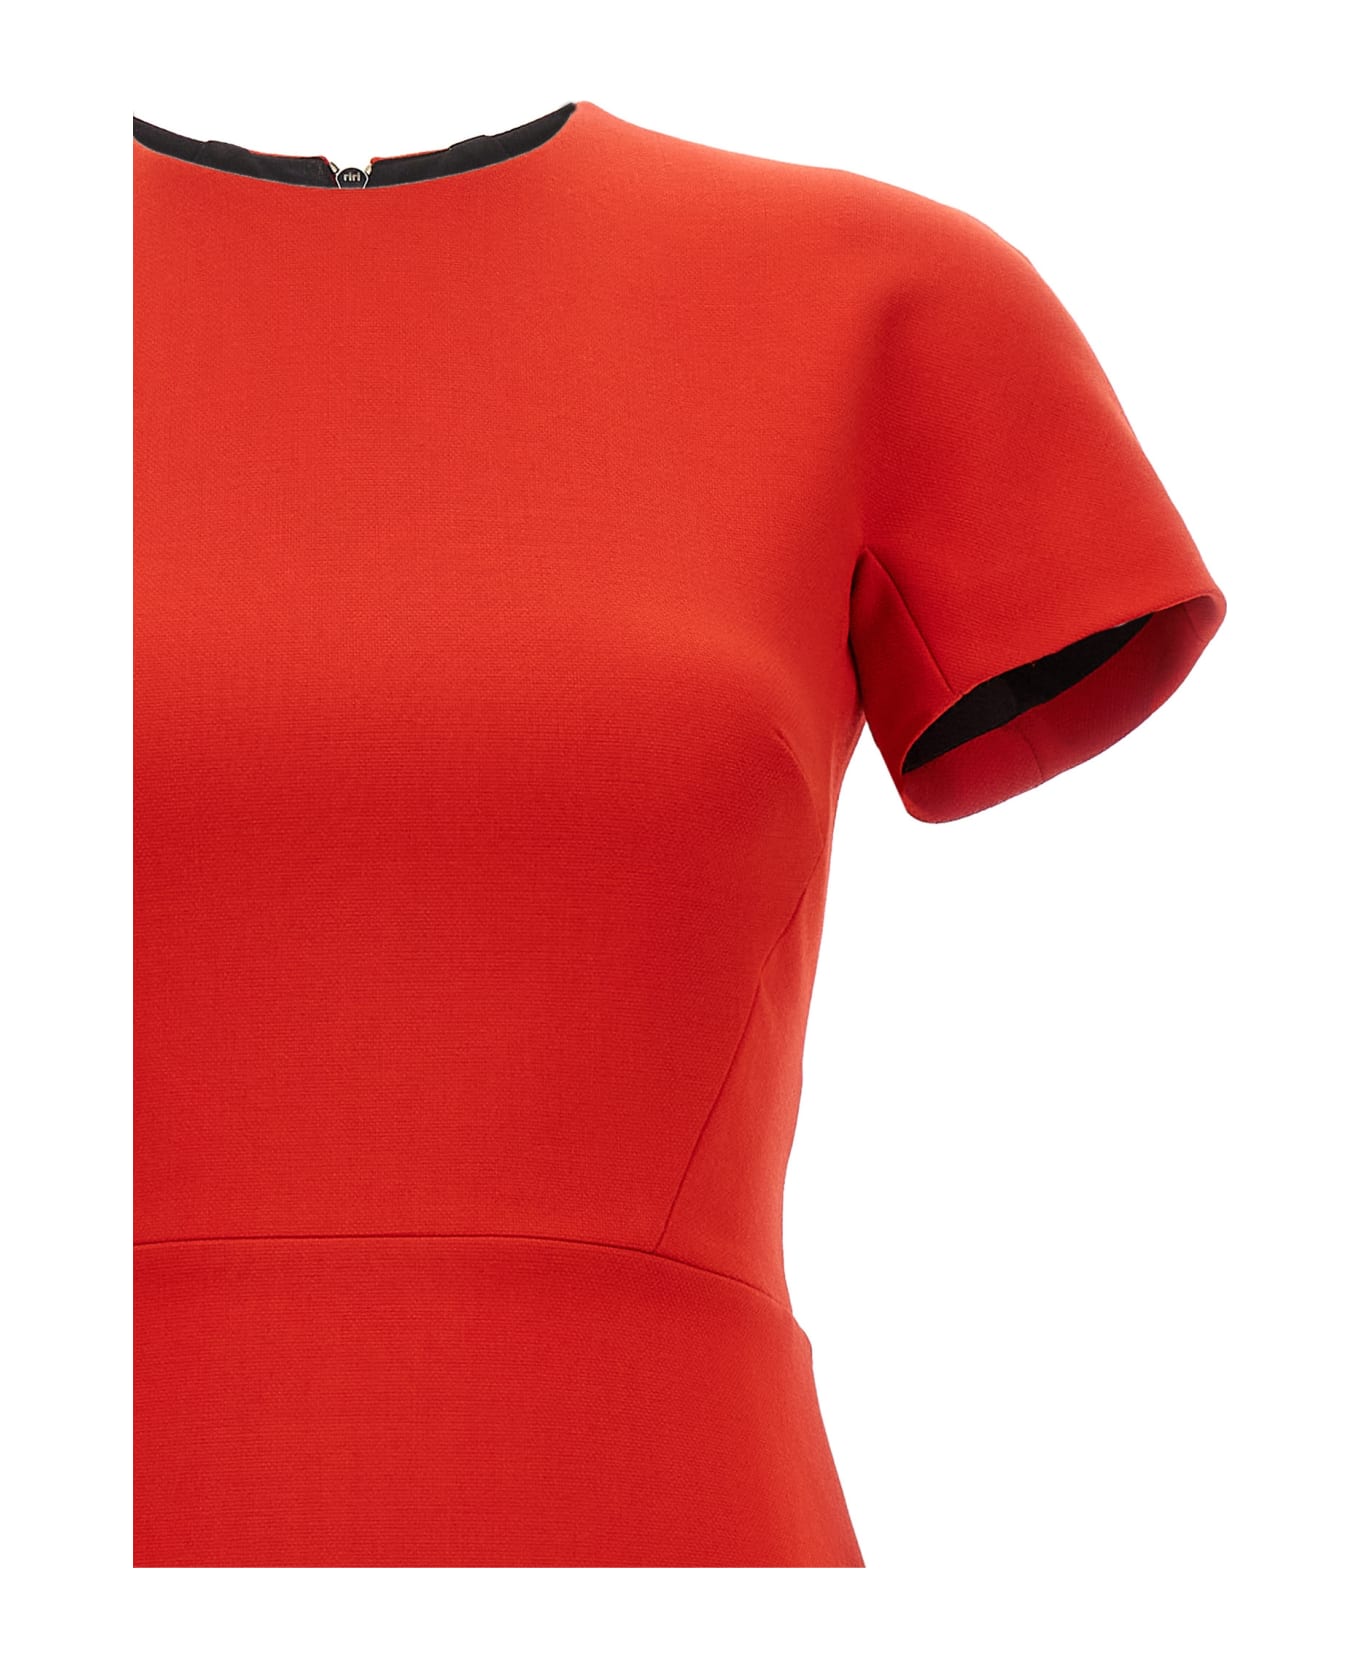 Victoria Beckham 'fitted T-shirt' Dress - Red